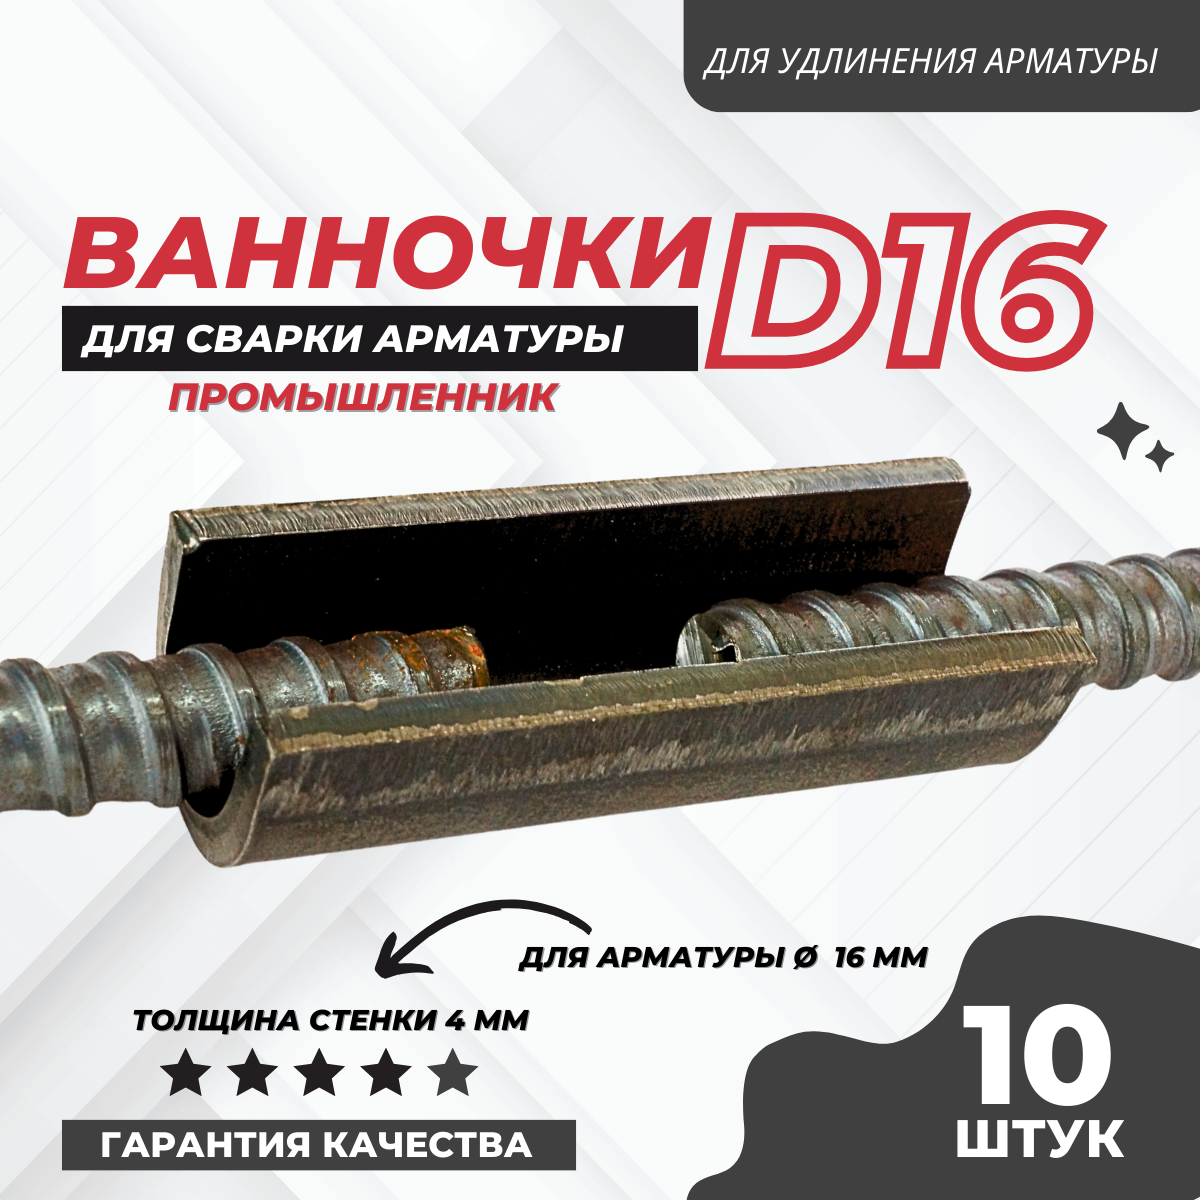 Ванночка для сварки арматуры Промышленник D16 10 шт/уп